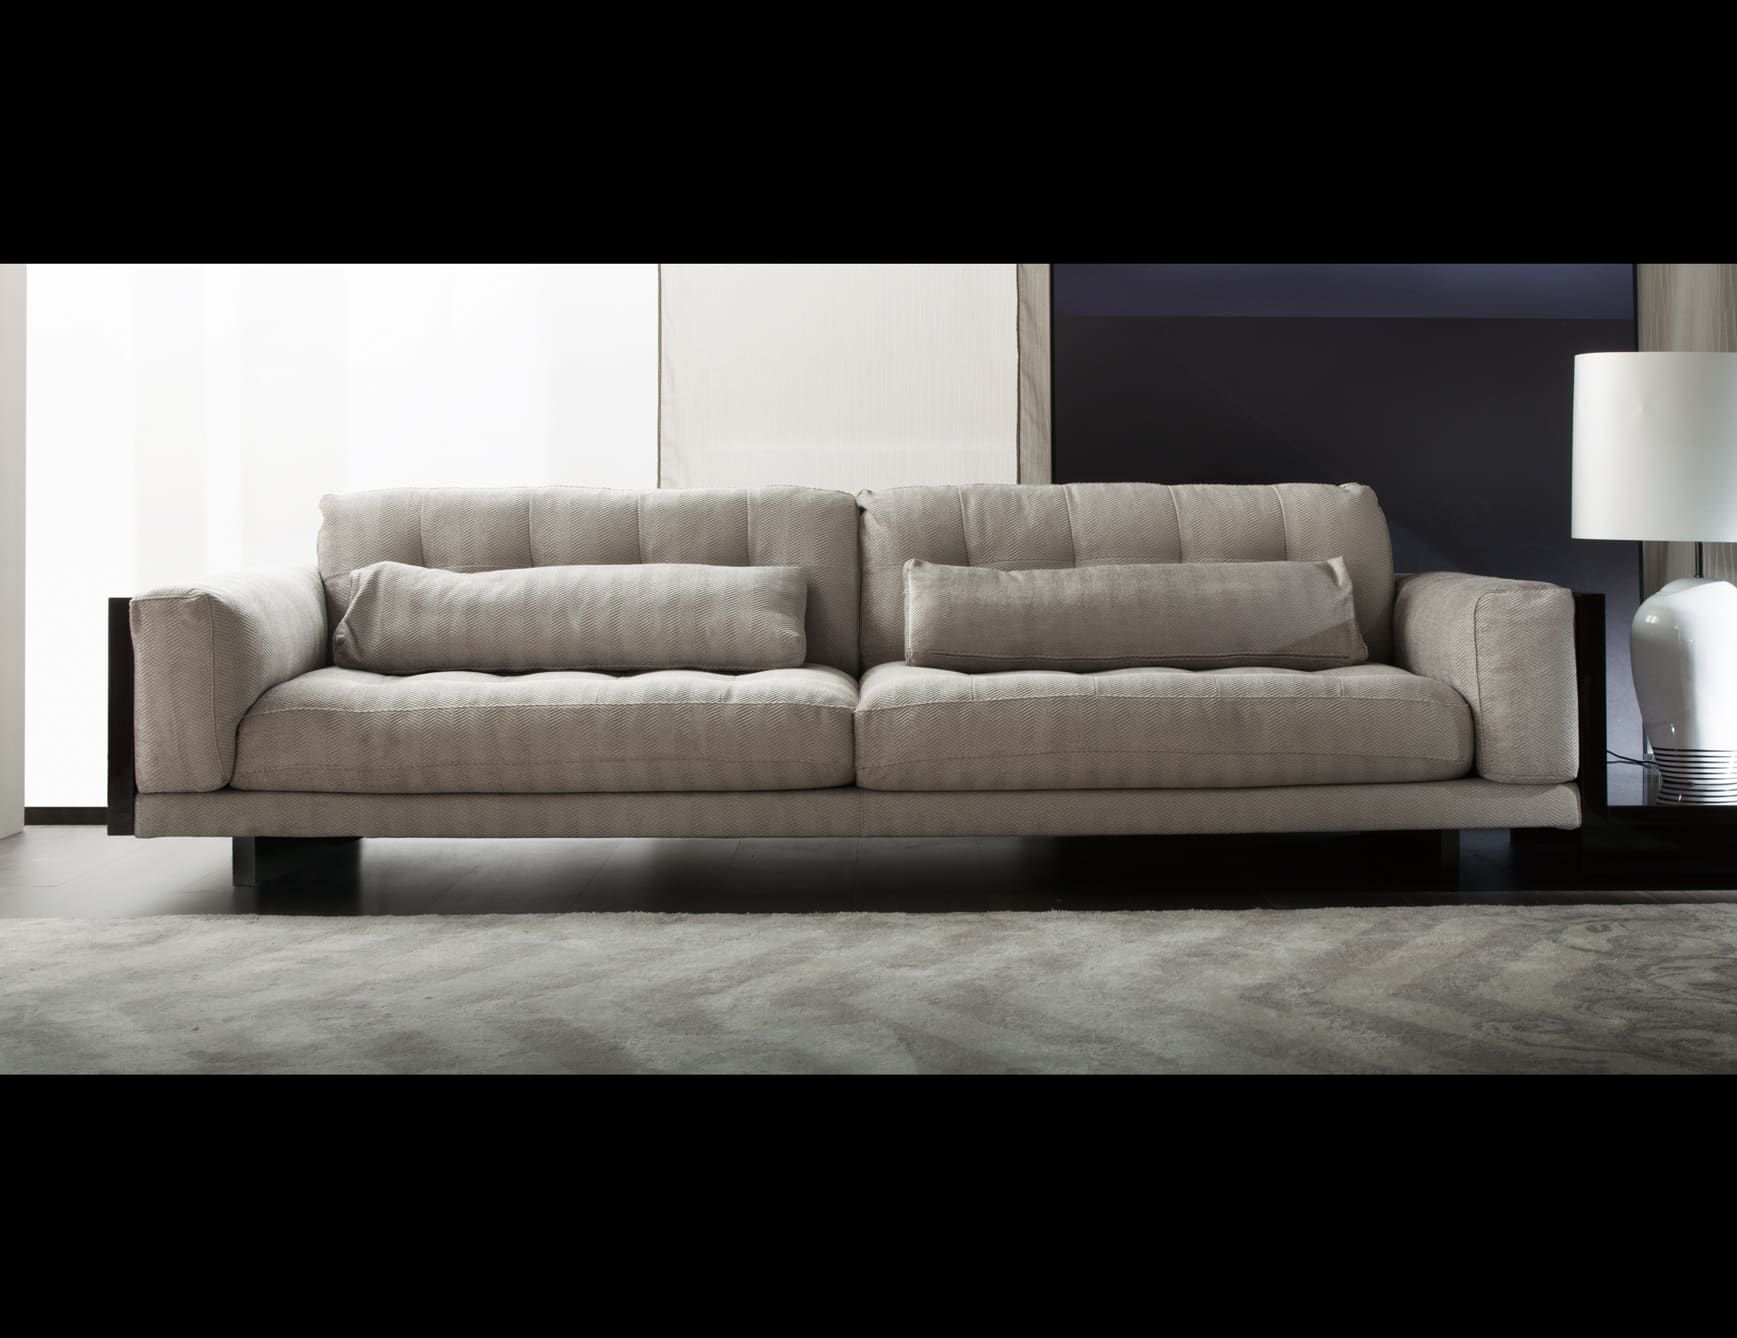 Feel Good modern Italian sofa chair with beige leather